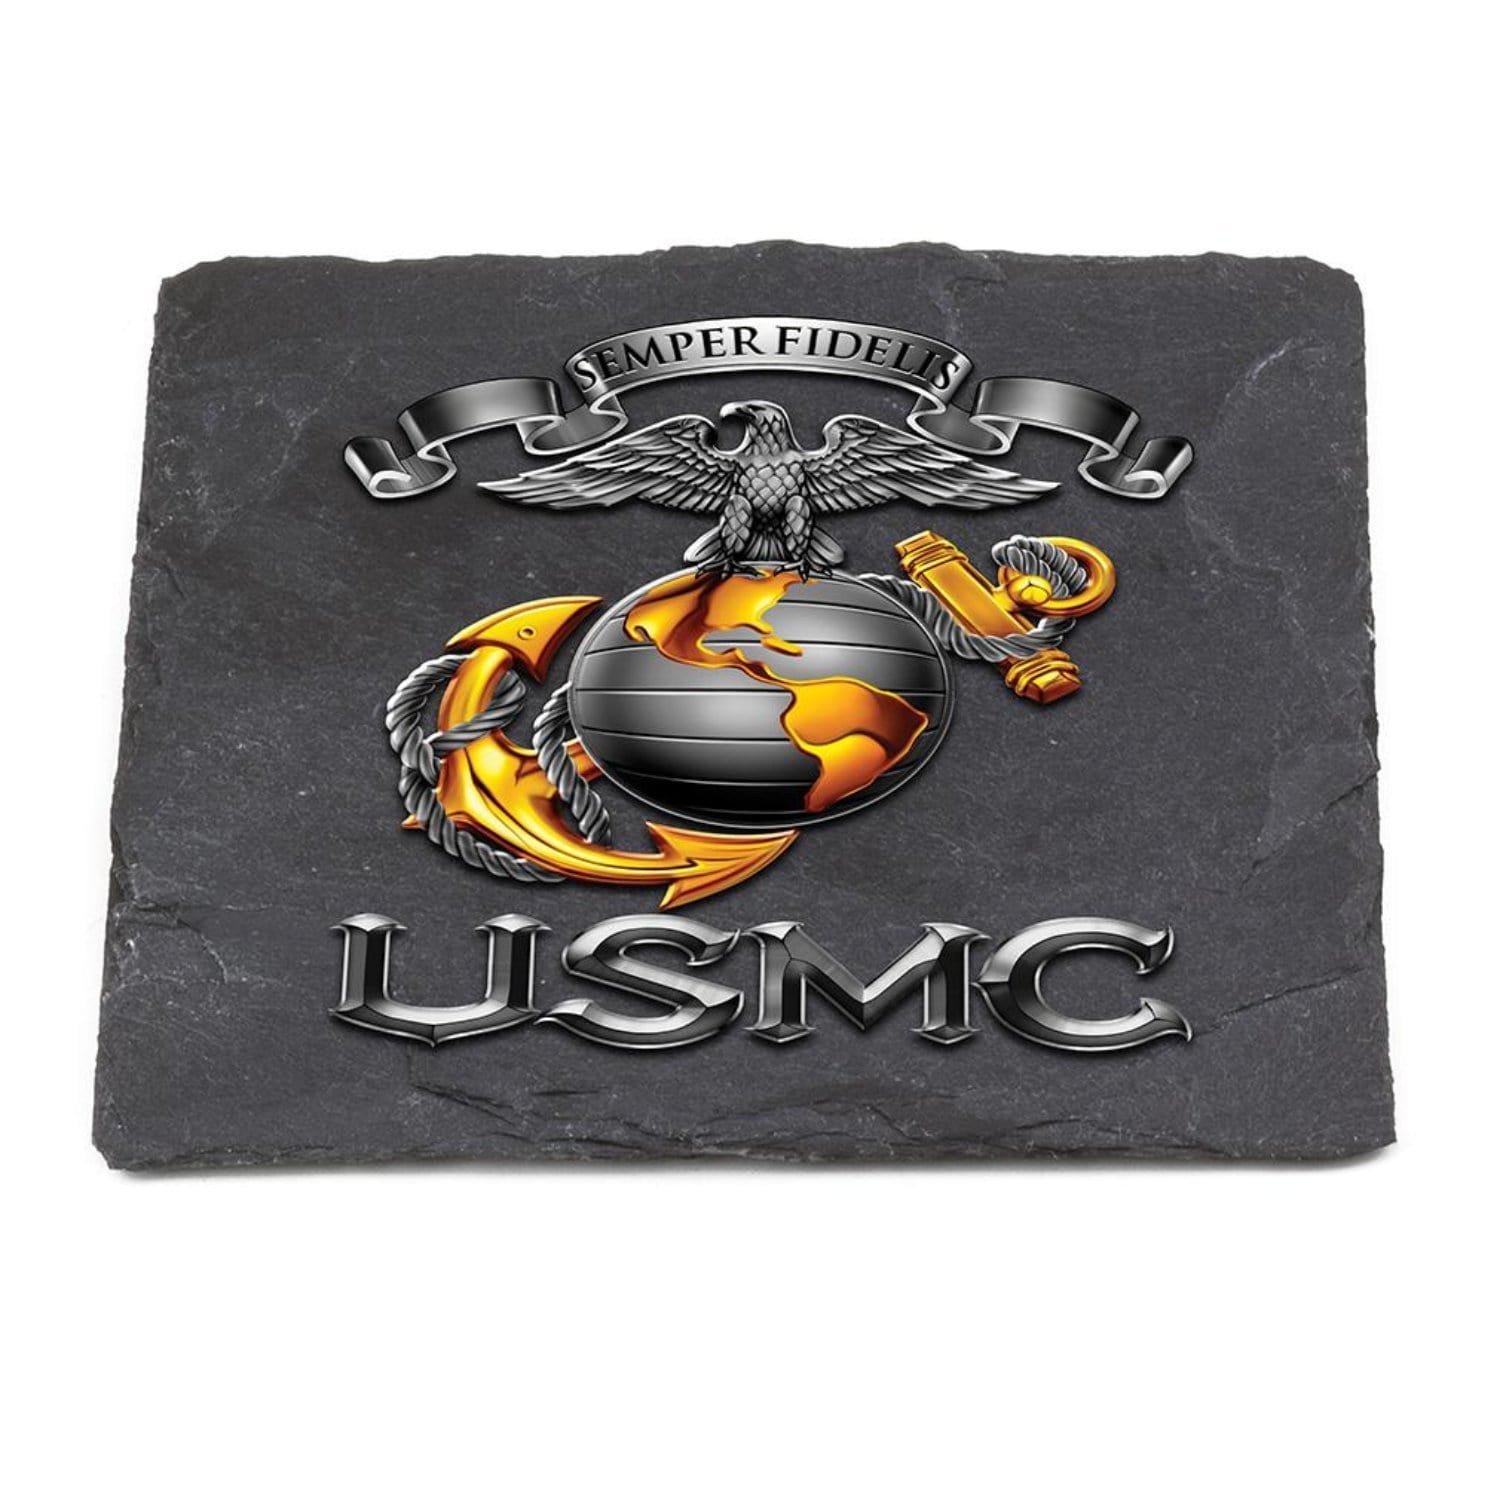 USMC-Semper Fidelis Coaster Black